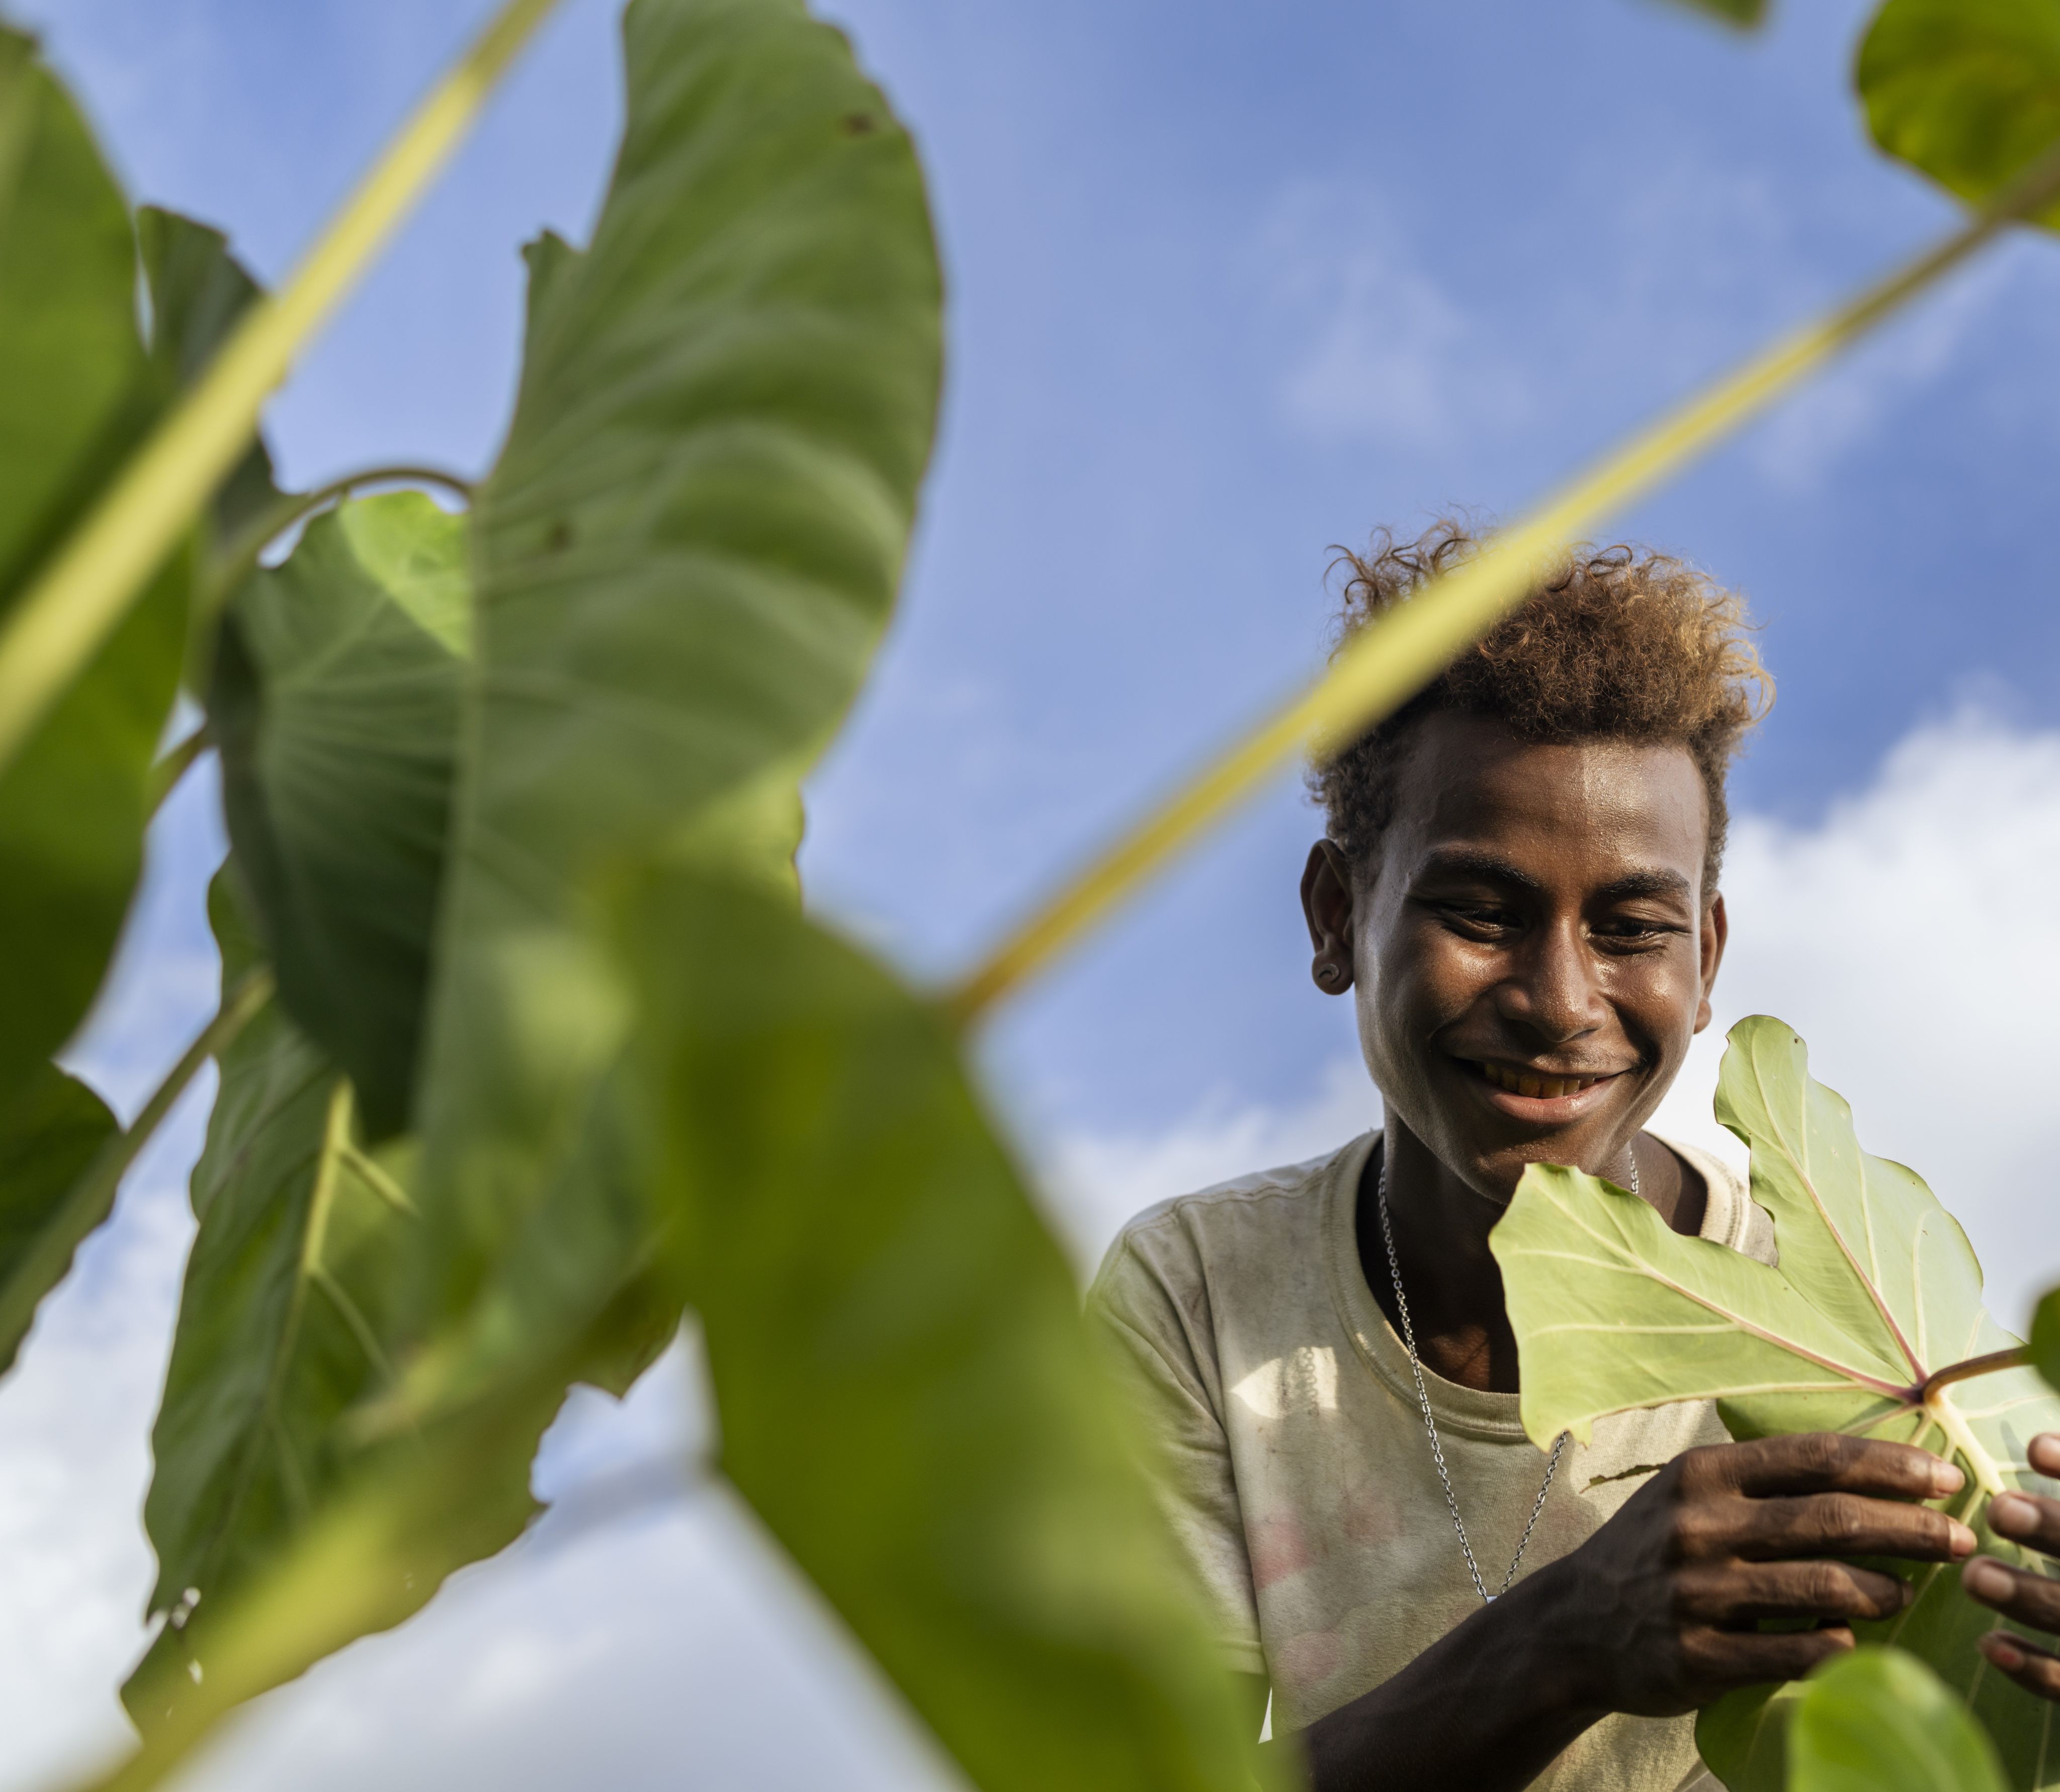 Junior, 16, inspecting taro plants he’s growing in a community garden in Malaita Province, the Solomon Islands.